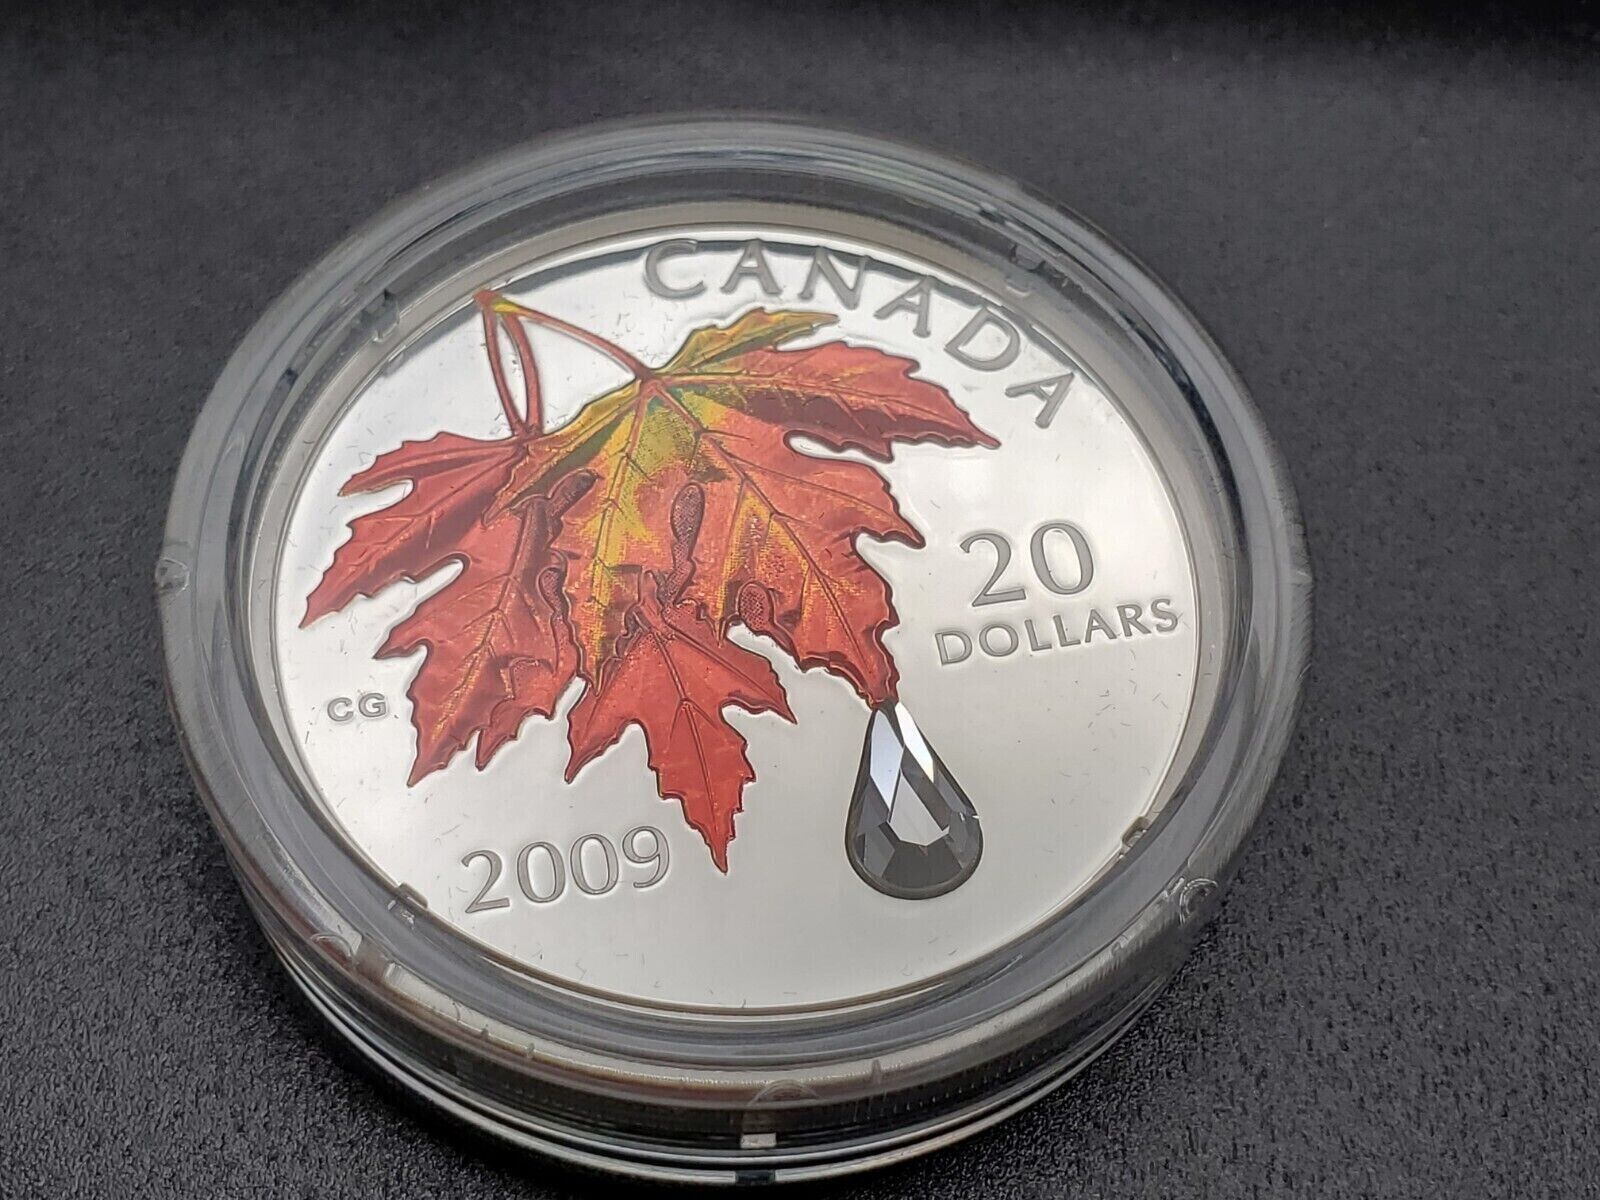 1 Oz Silver Coin 2009 $20 Canada Crystal Raindrop Swarovski Autumn Maple Leaves-classypw.com-1